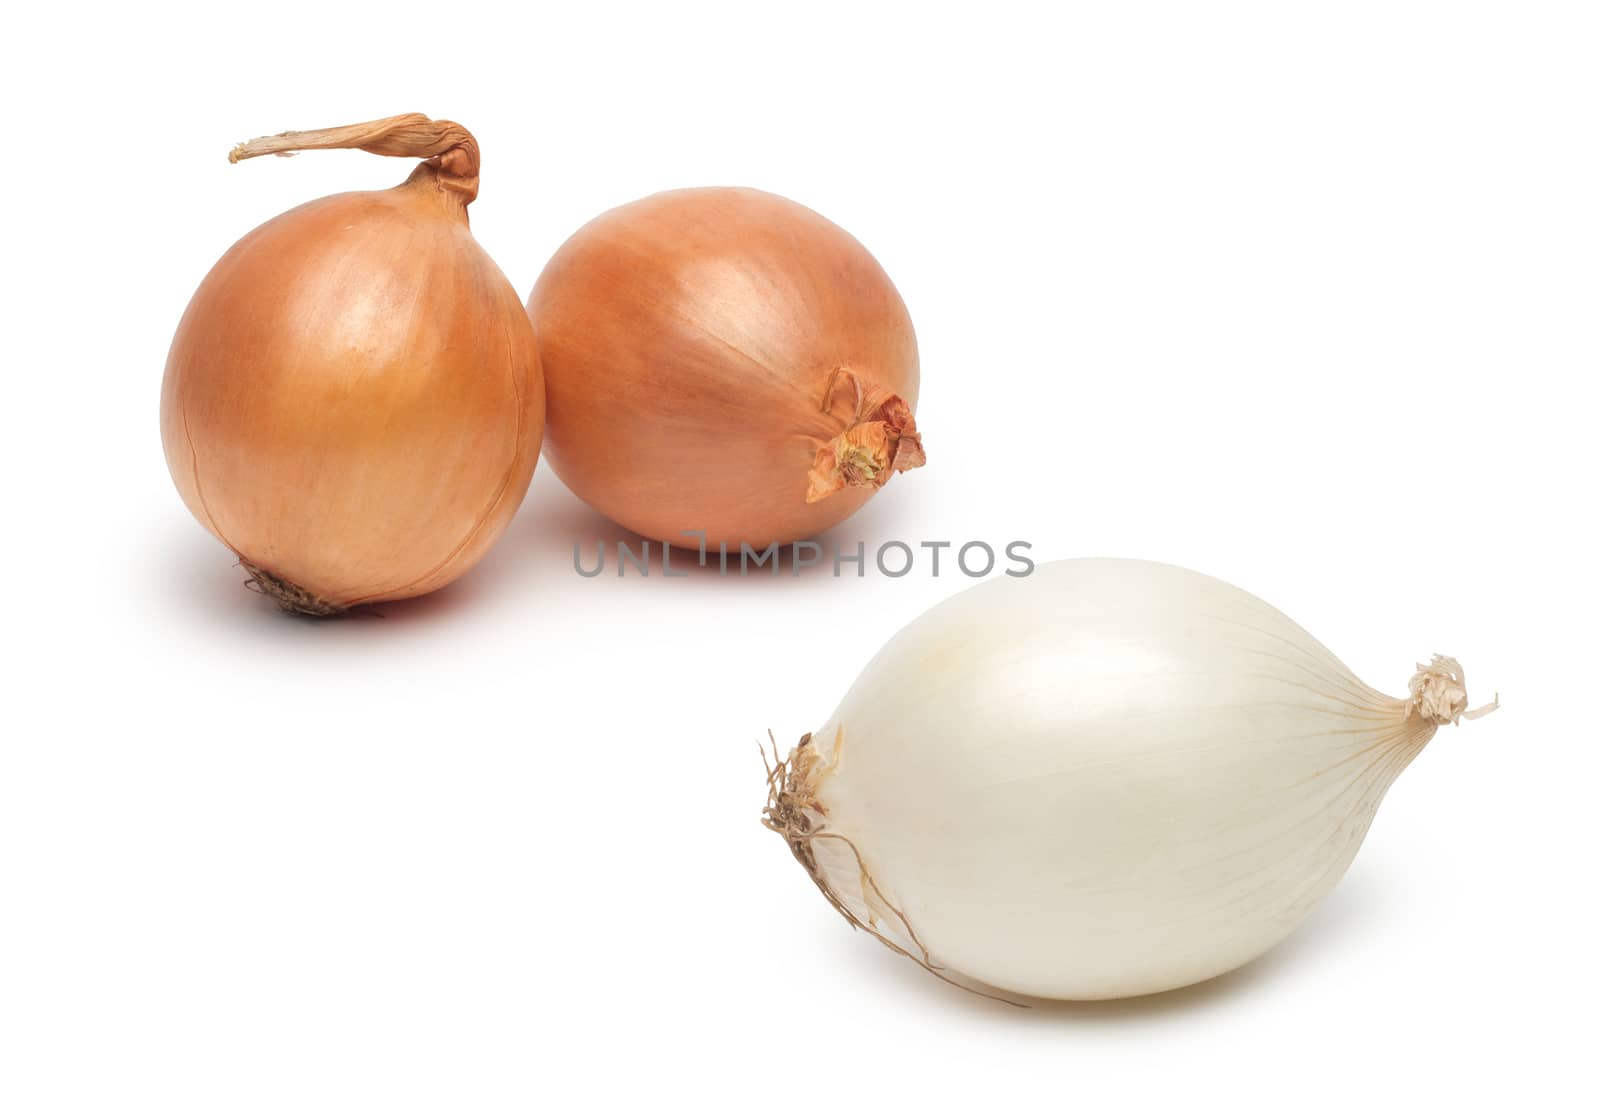 Ripe onions by ozaiachin